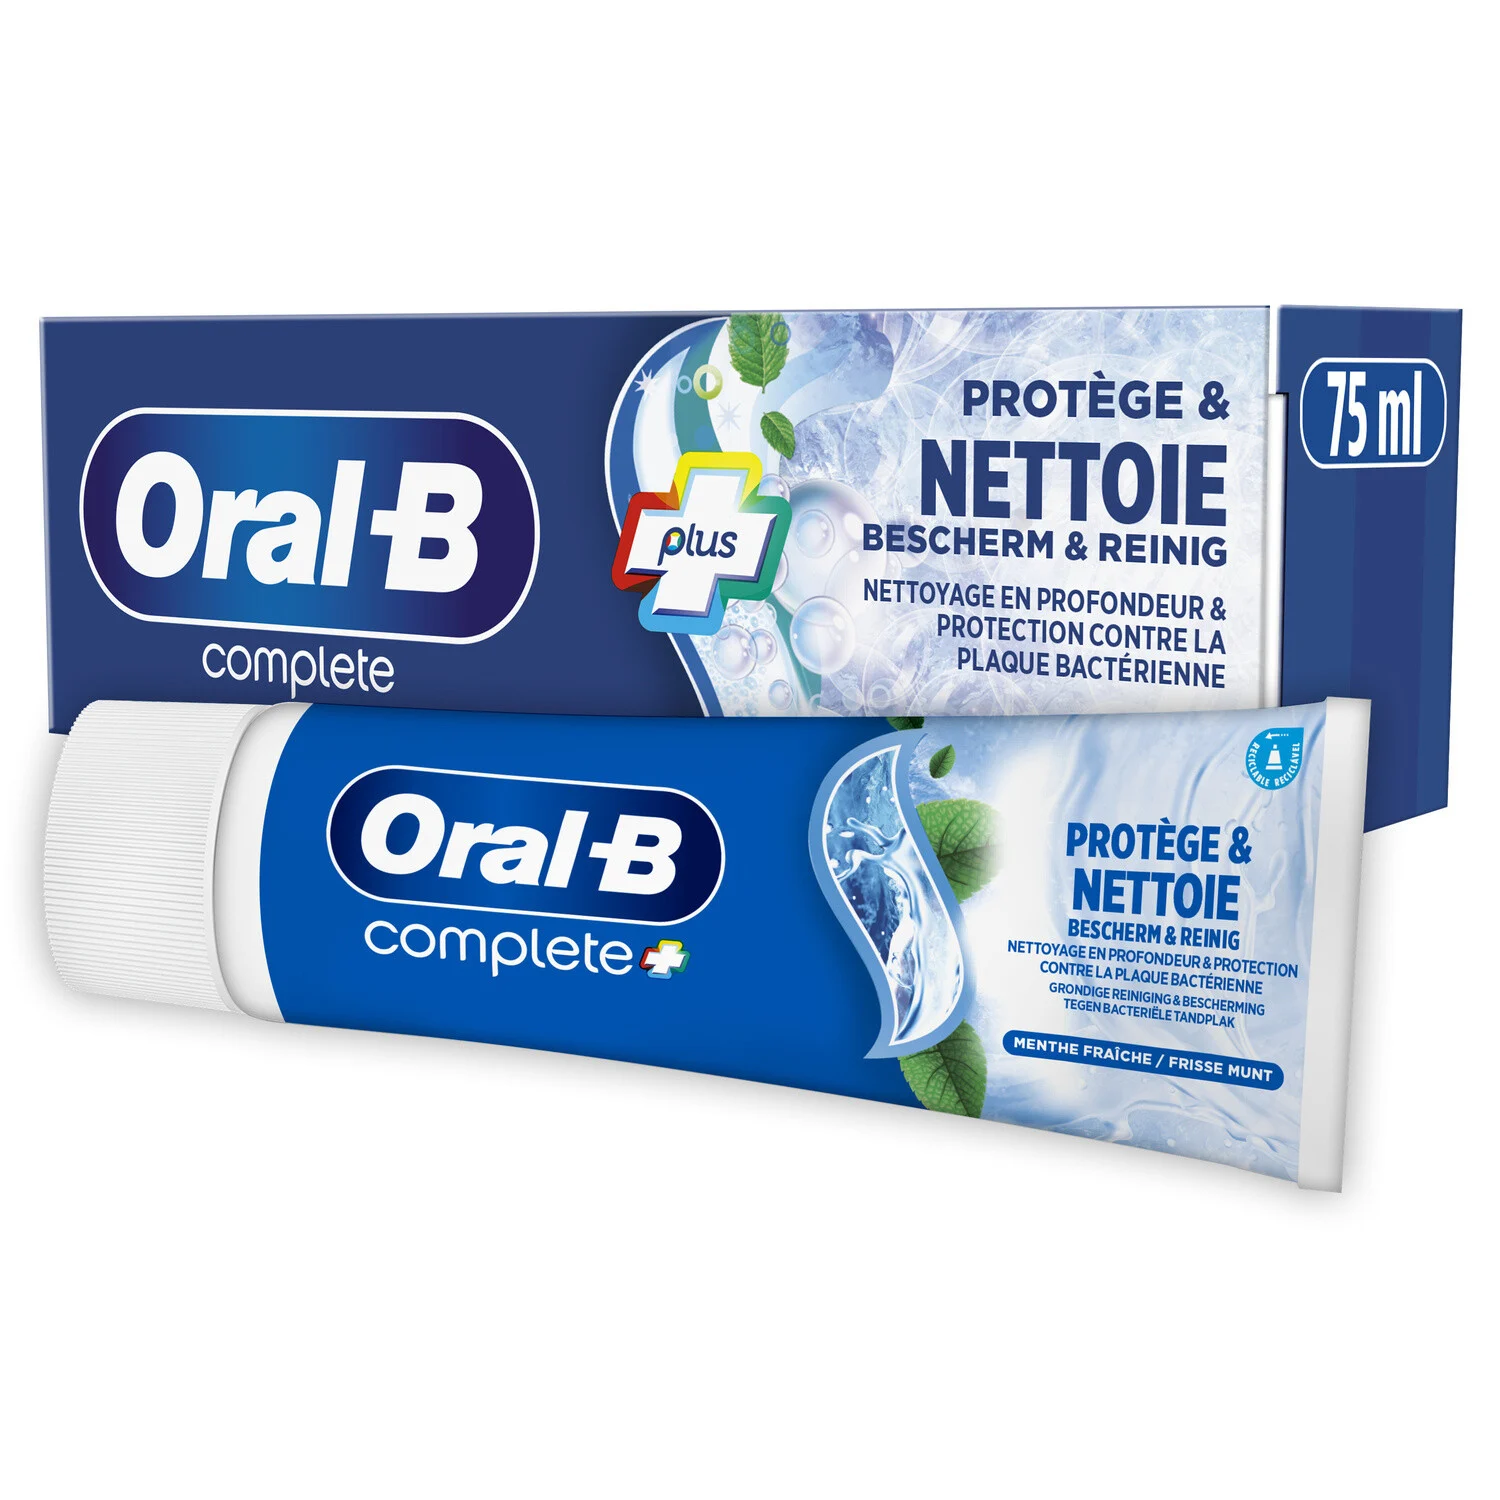 75ml Oral B Dent Protege Net